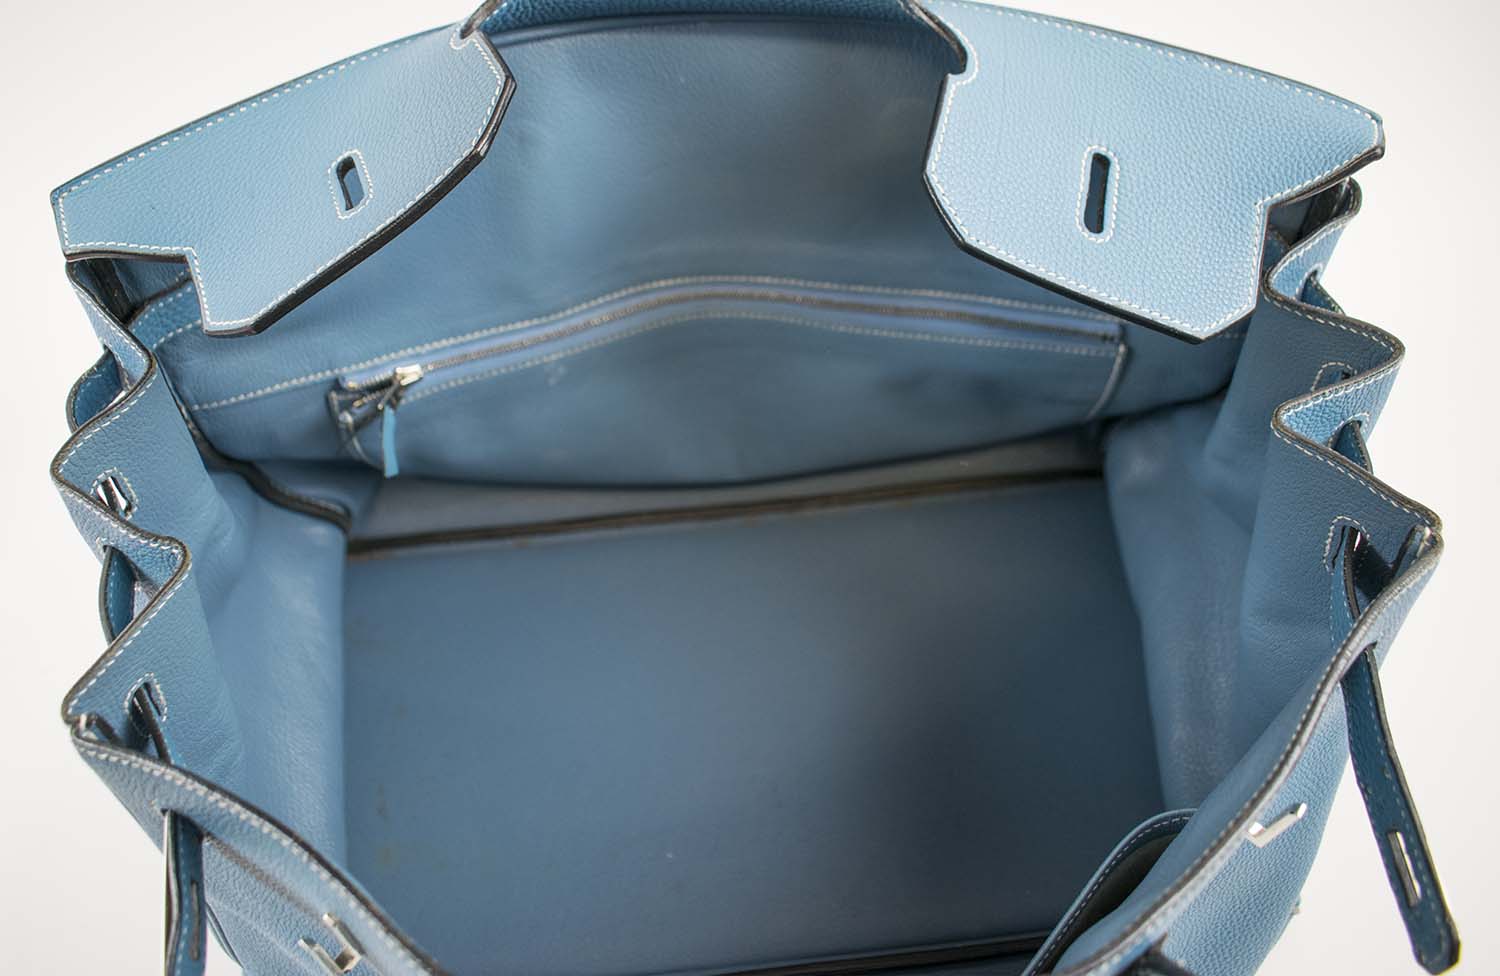 Hermes Blue Jean Togo Leather Palladium Hardware Birkin 40 Bag